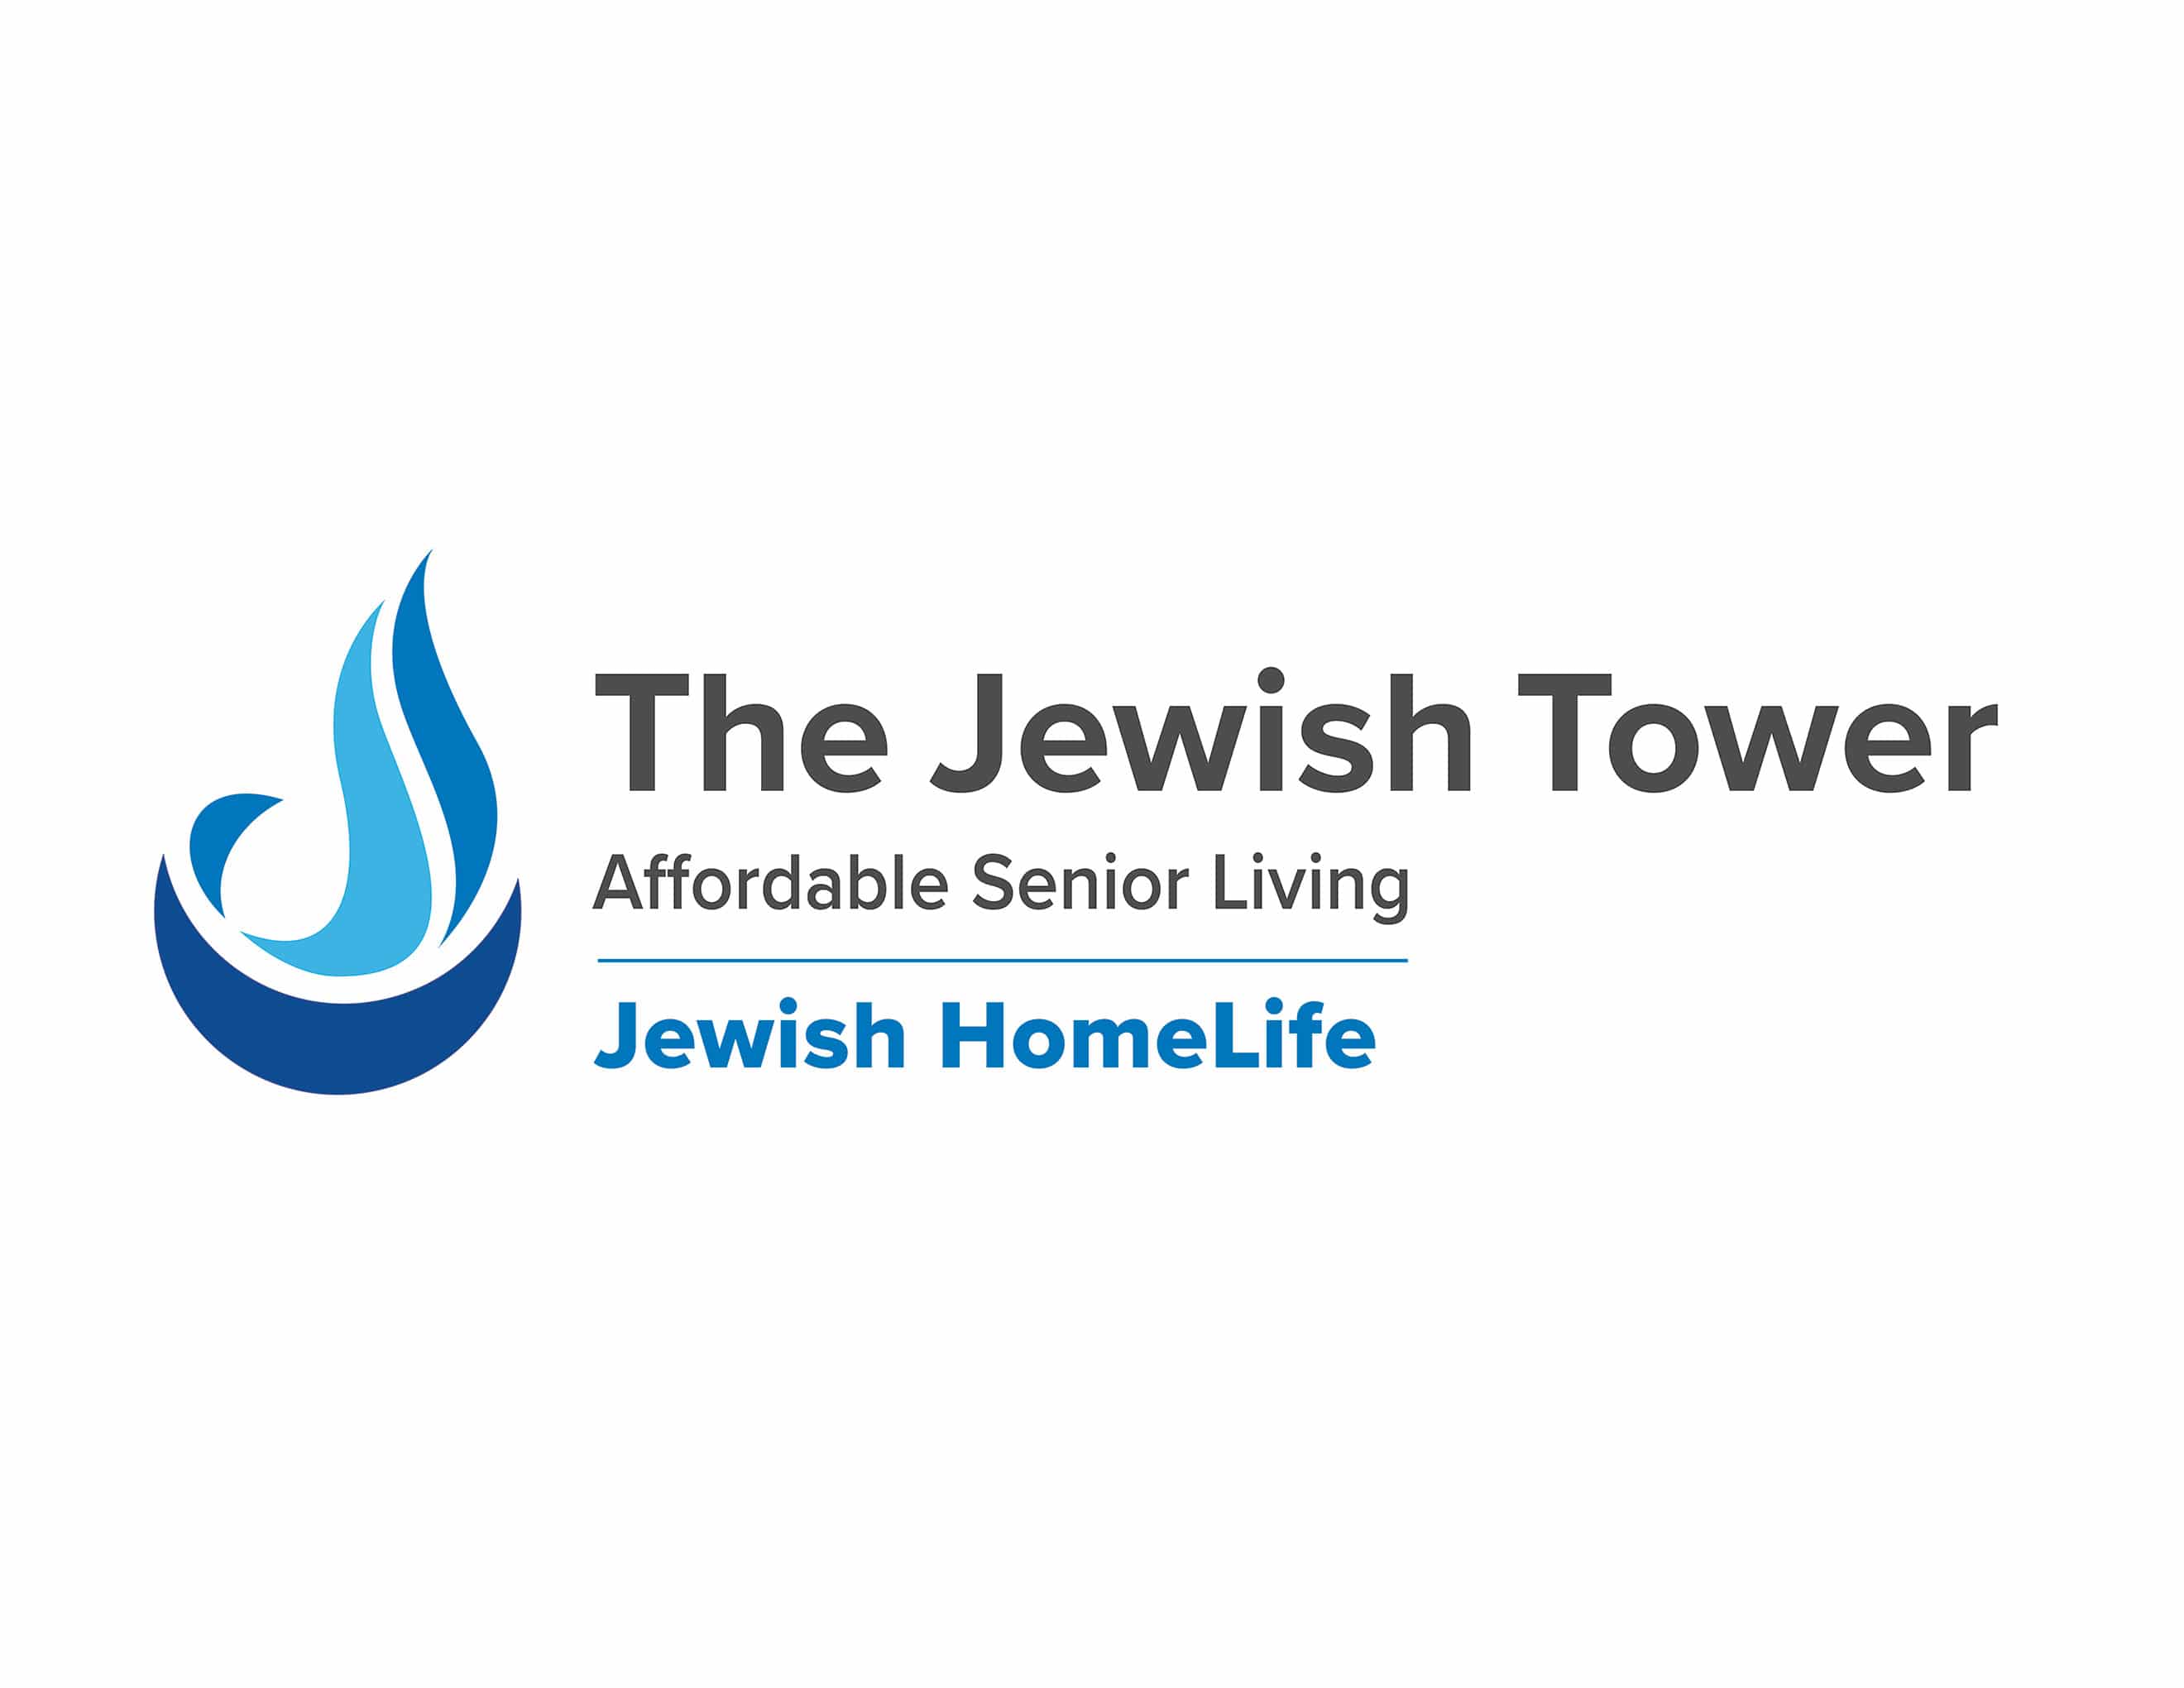 The Jewish Tower